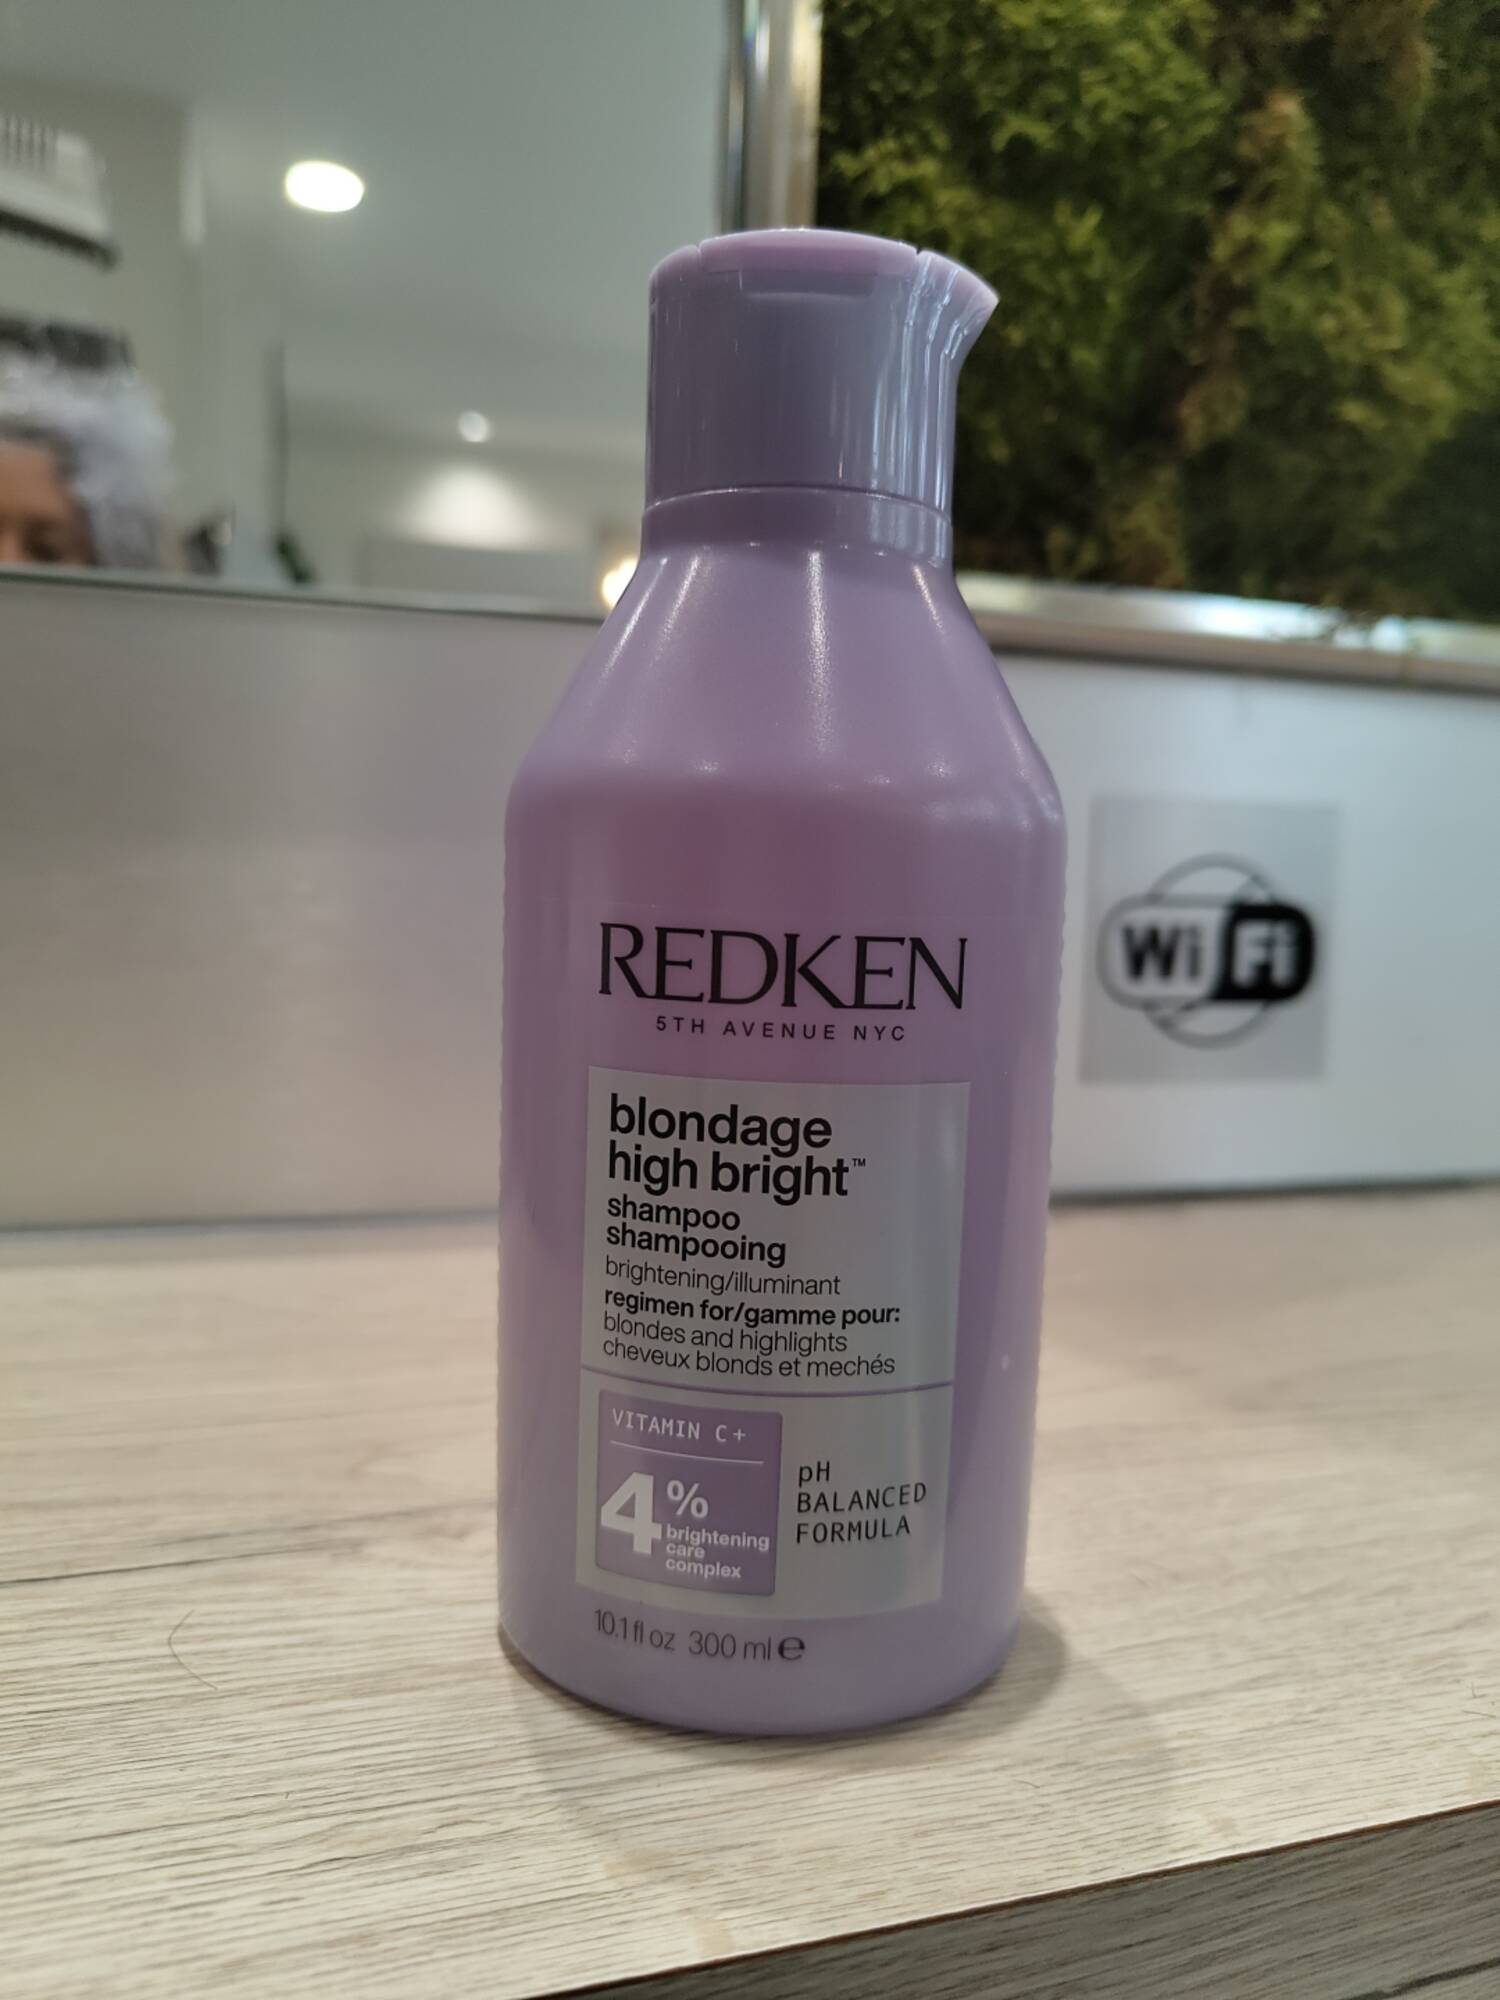 REDKEN - Blondage high bright - Shampooing illuminant